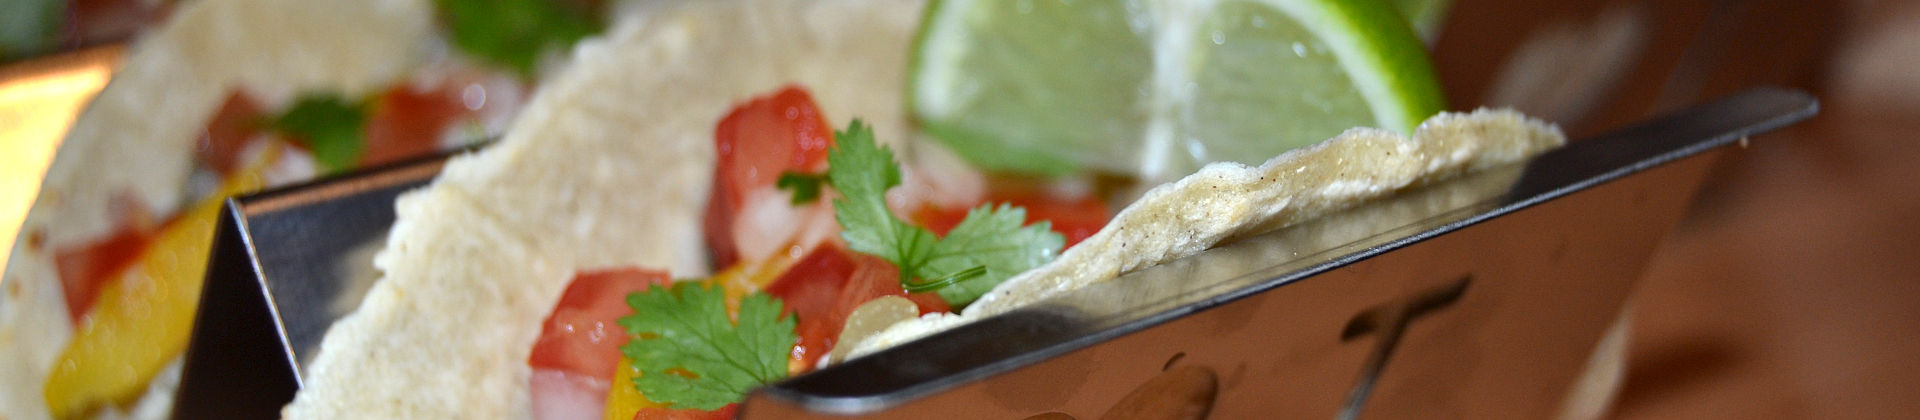 Tortillas und mexikanische Lebensmittel online | Nantli.de